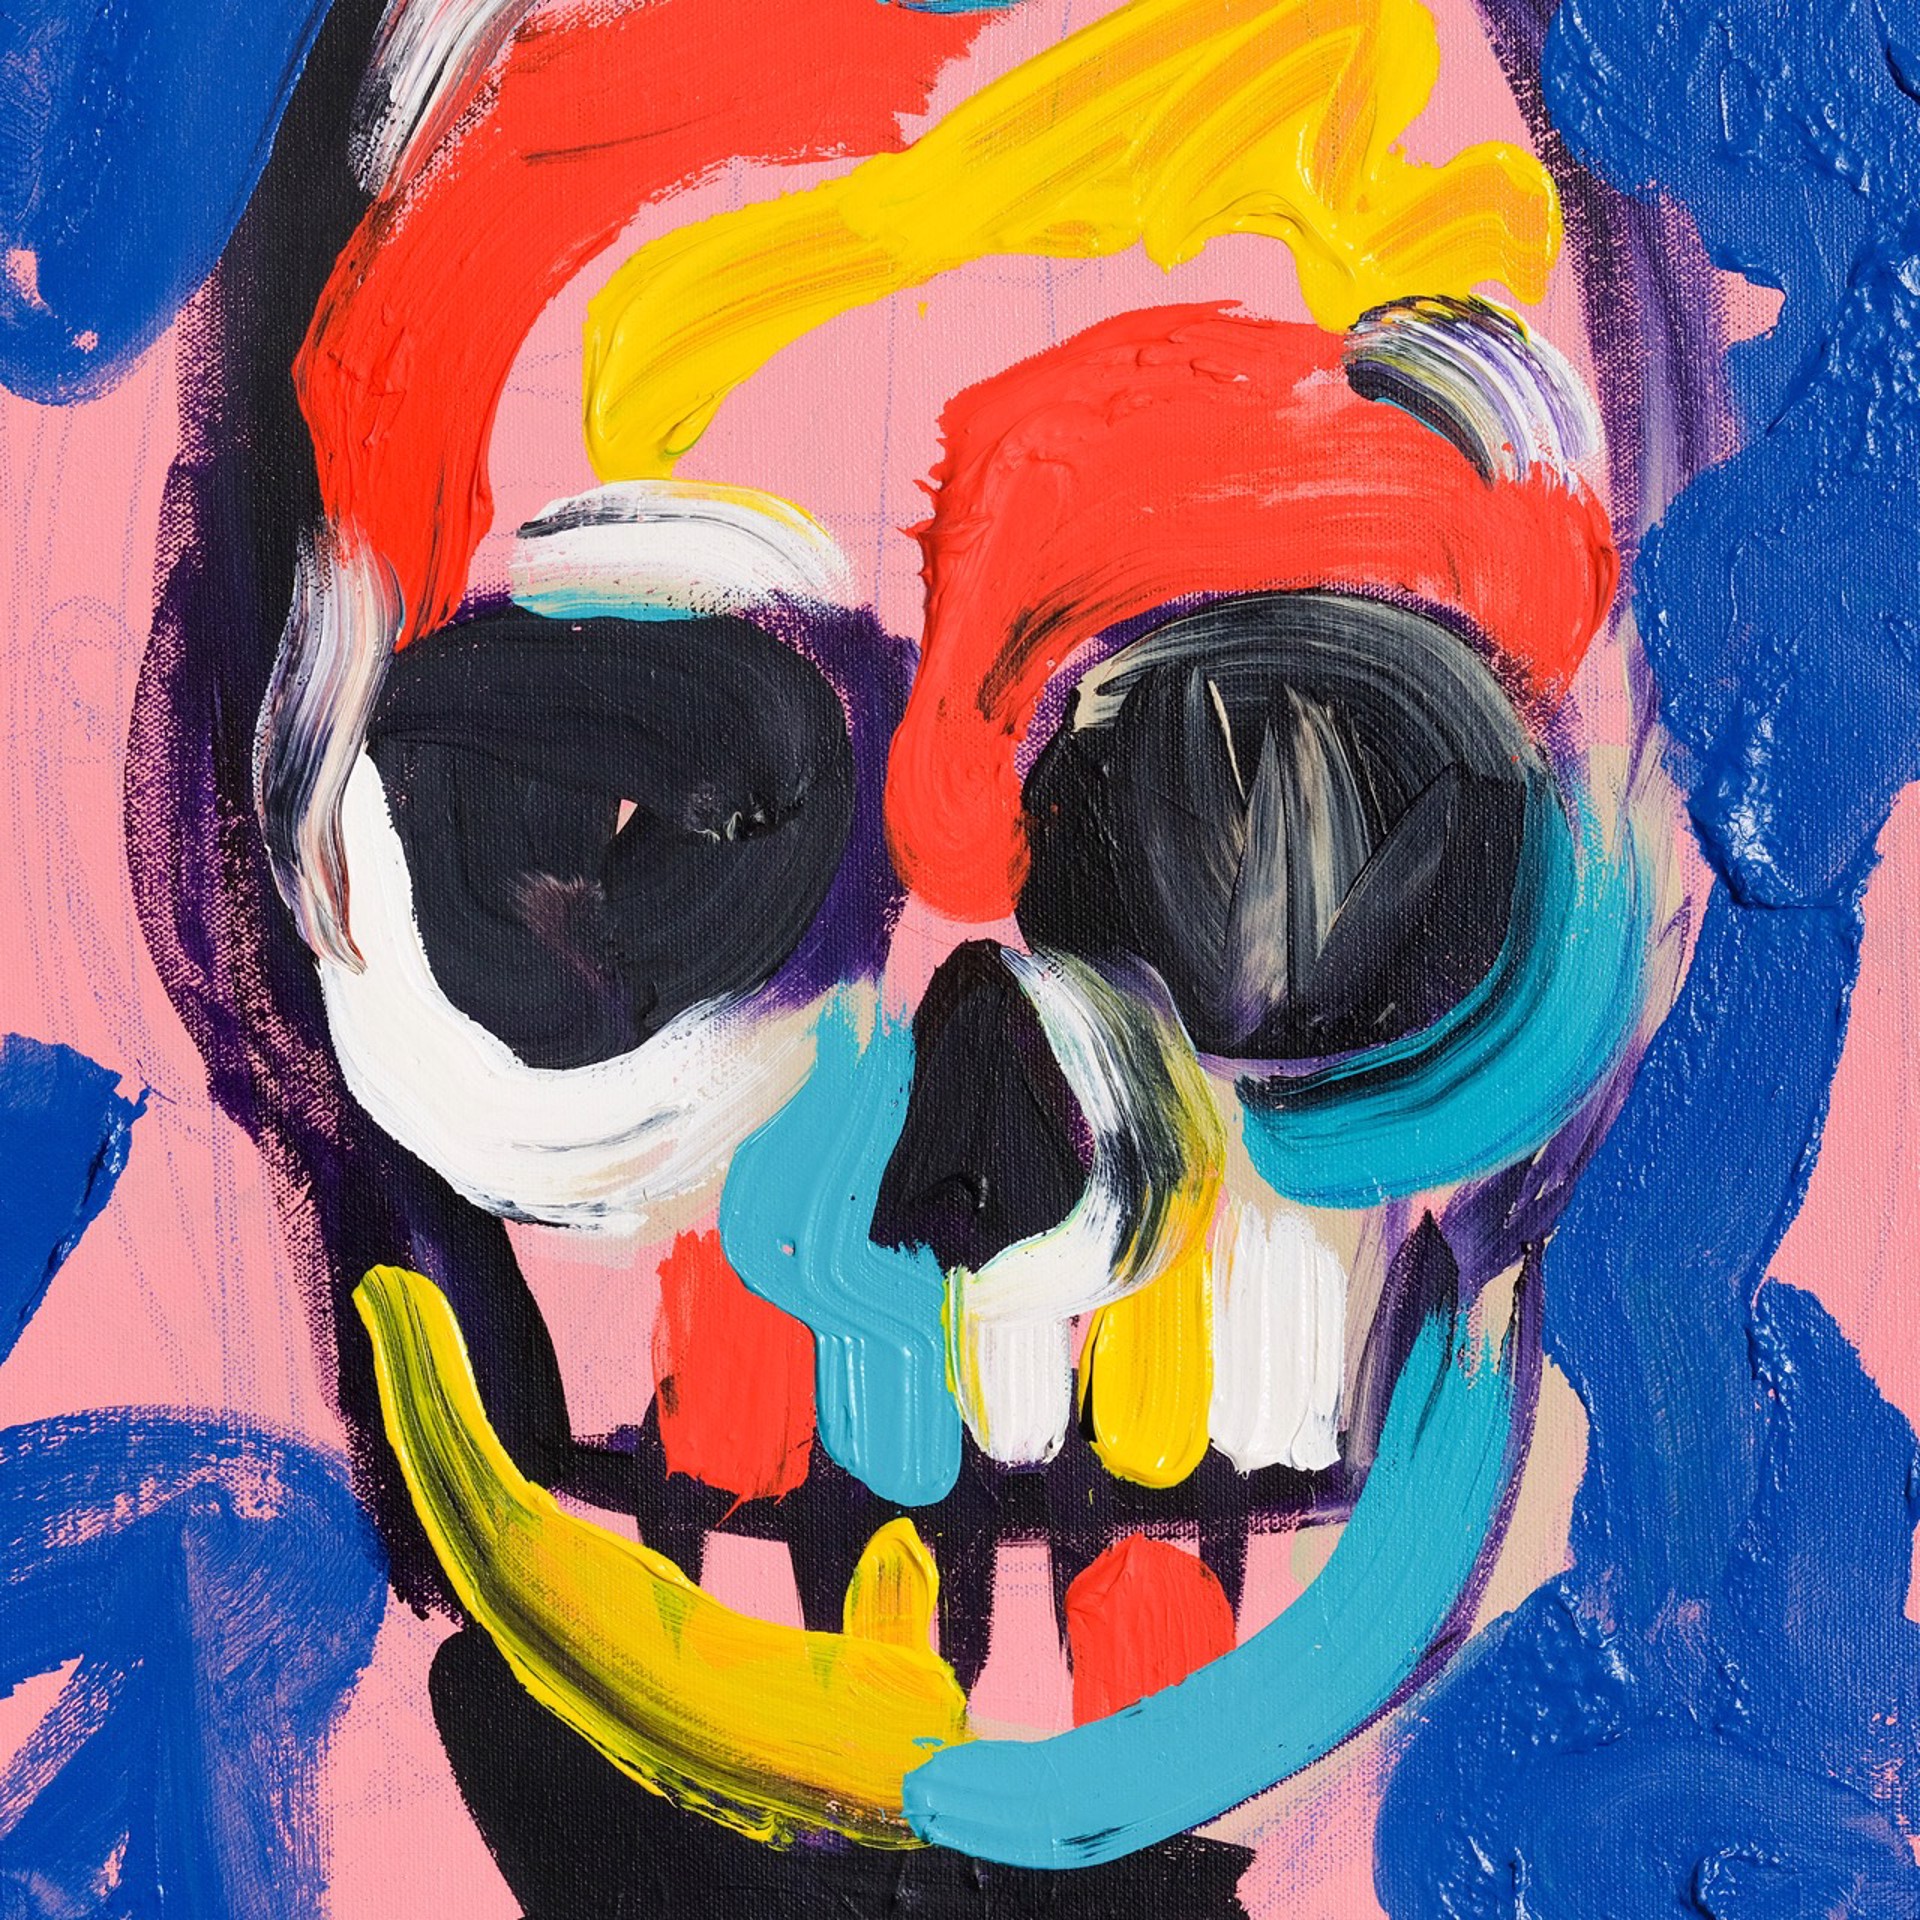 Skull by Bradley Theodore